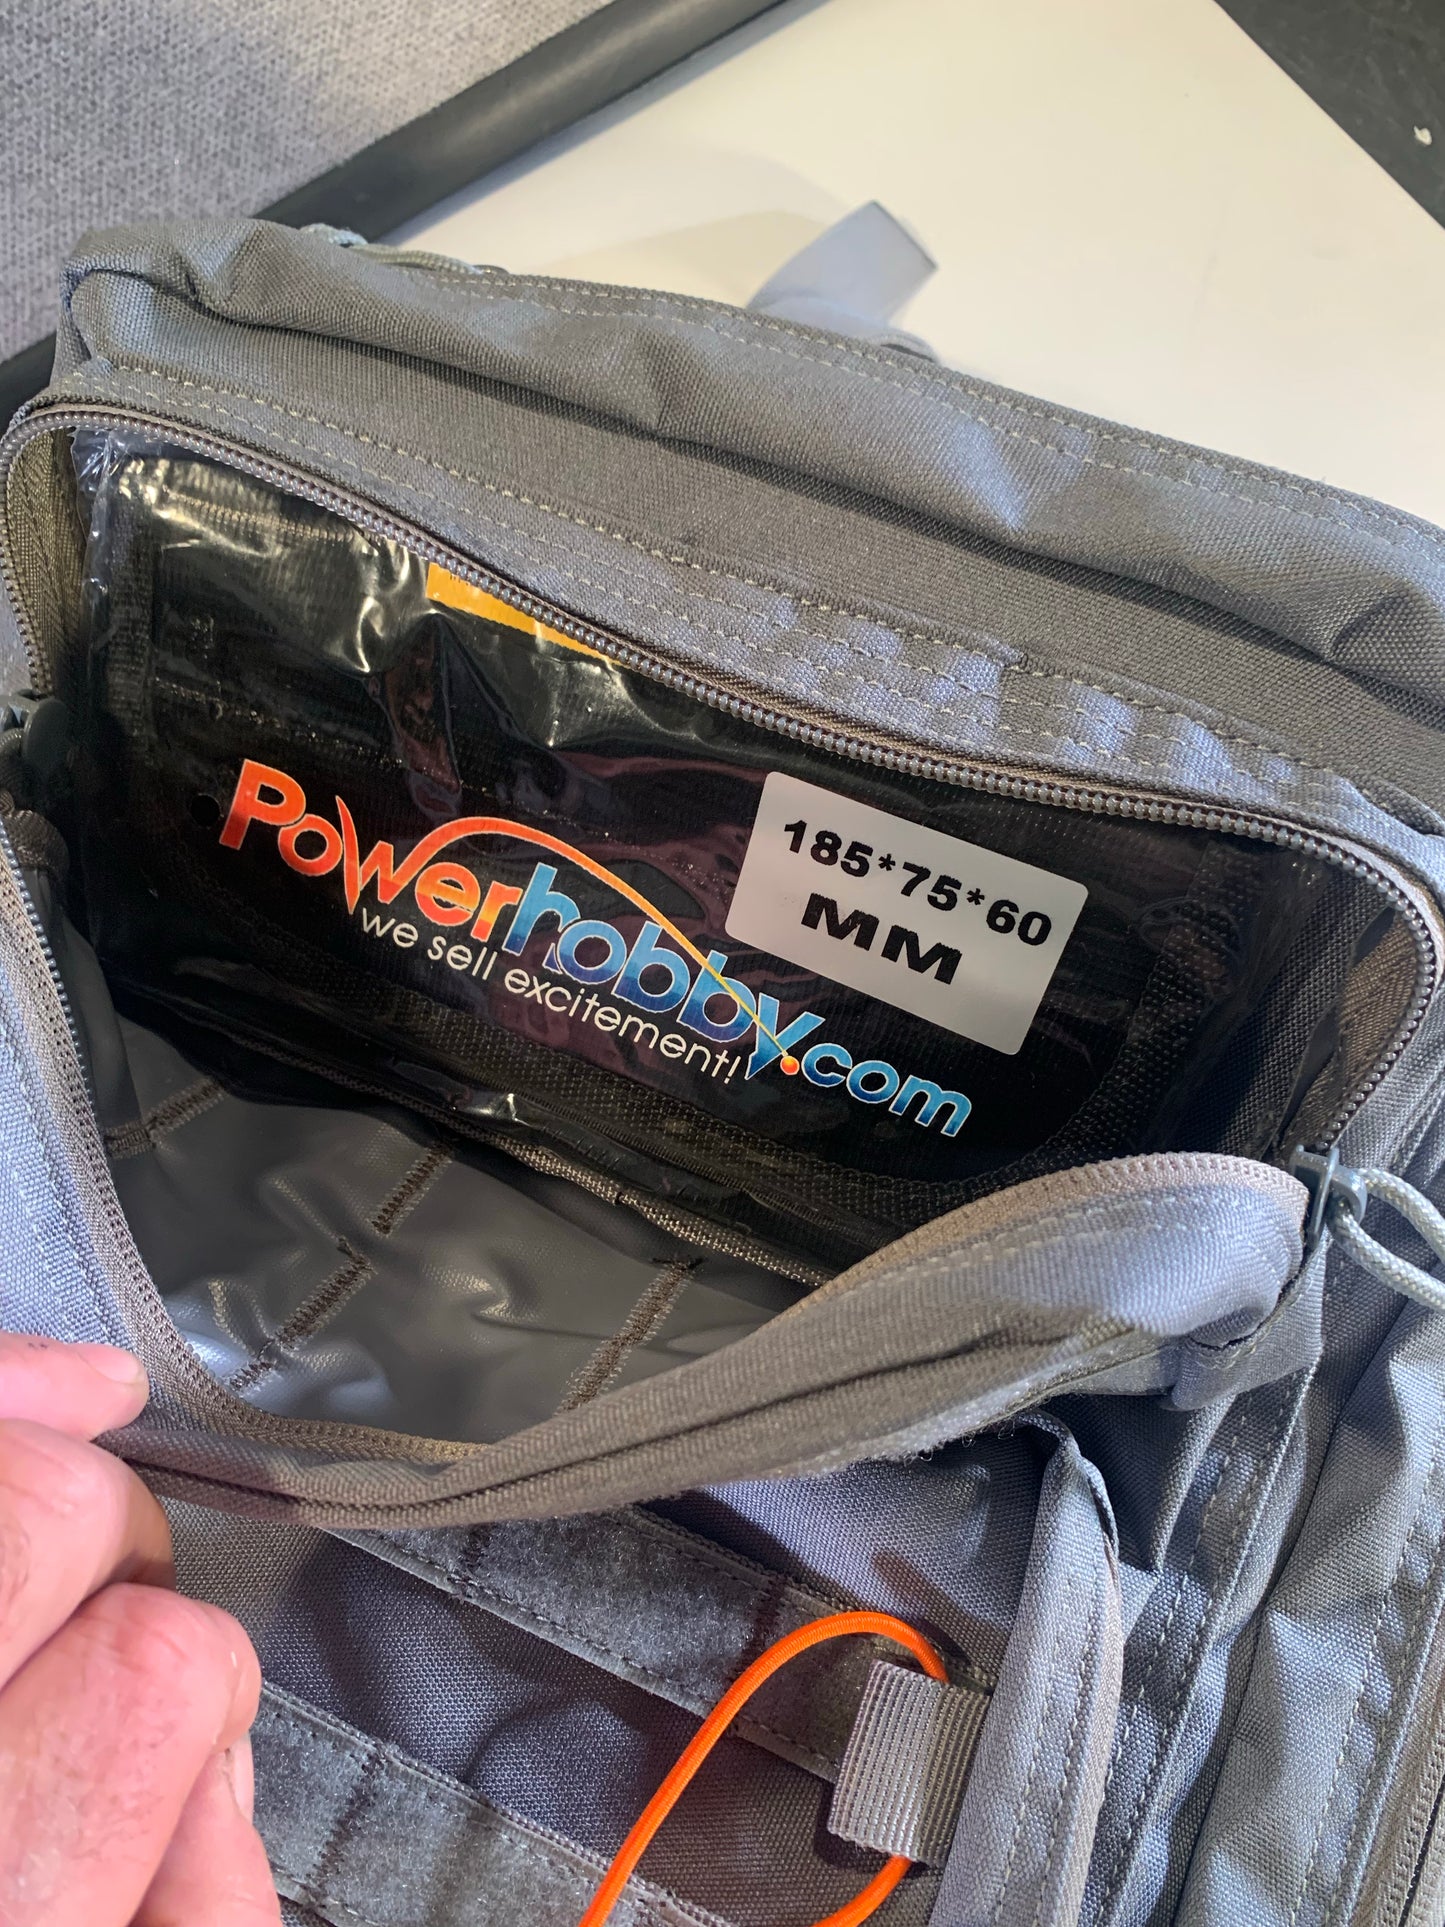 Powerhobby LiPo Bag